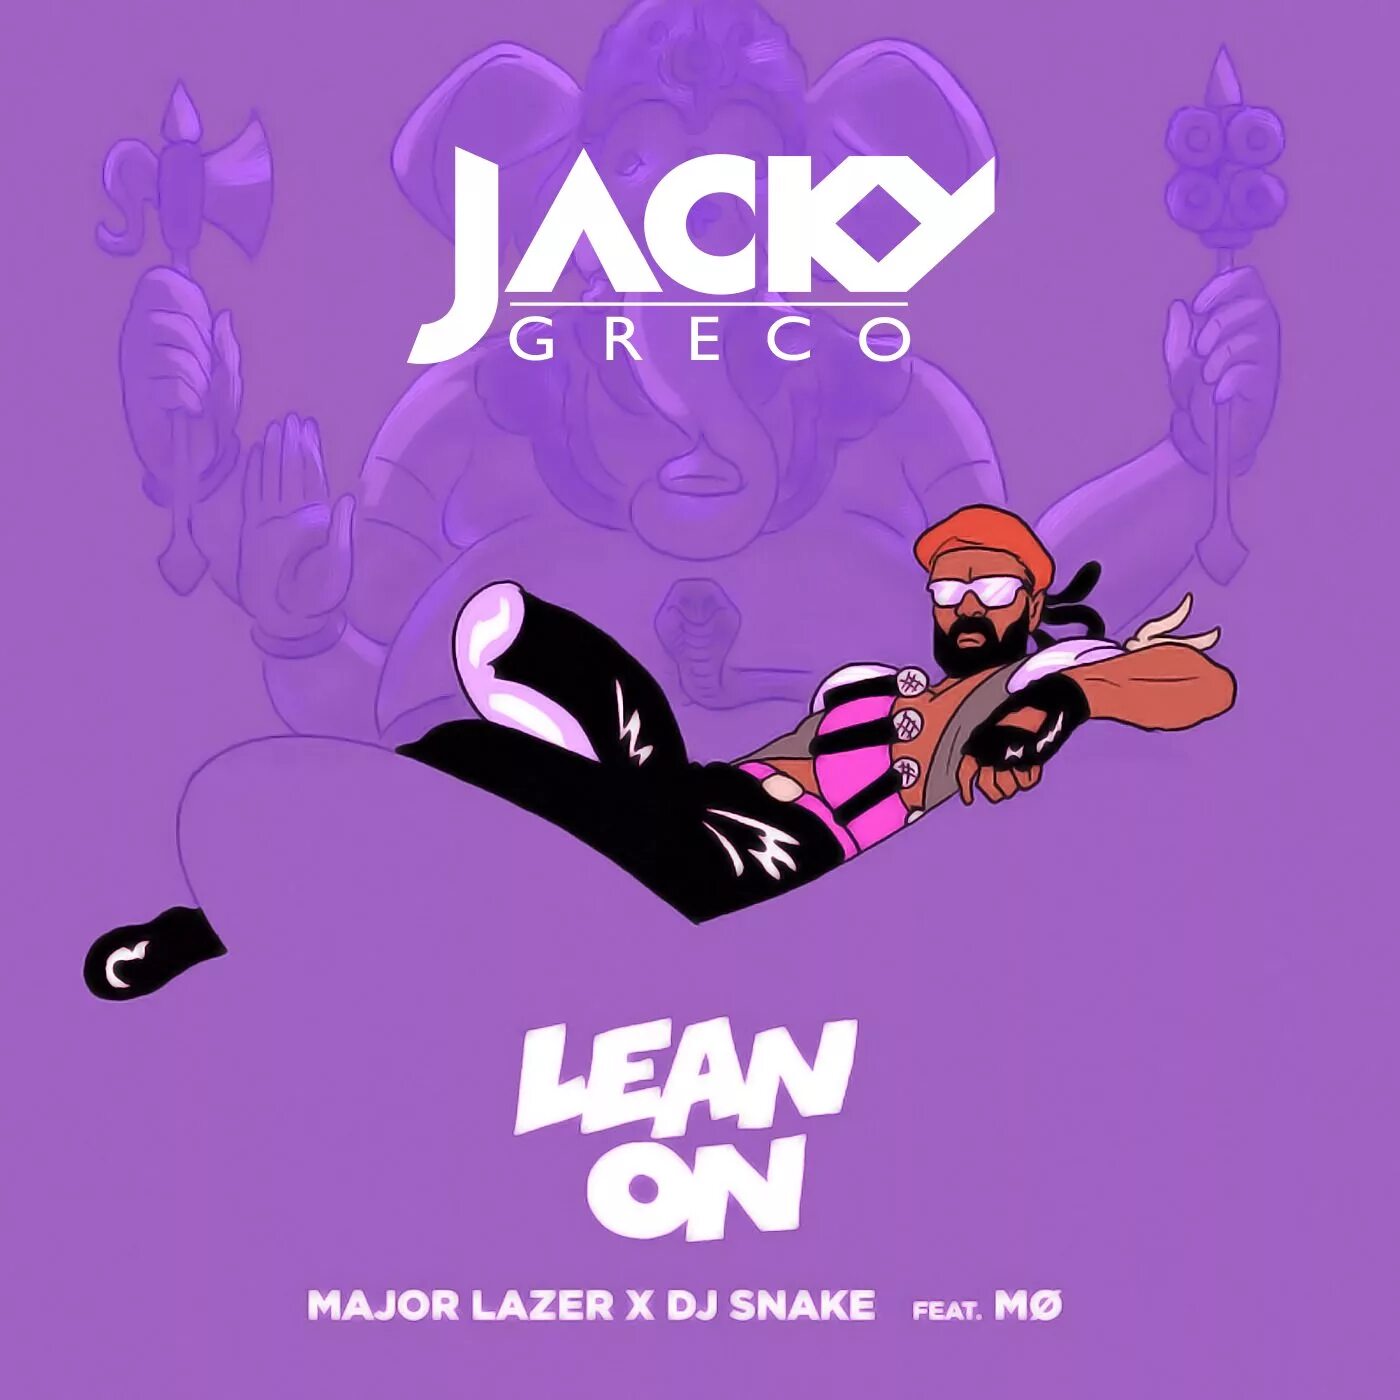 Dj snake feat. Major Lazer Lean on обложка. Major Lazer, DJ Snake, MØ — Lean on. Major Lazer & DJ Snake. DJ Snake Lean.